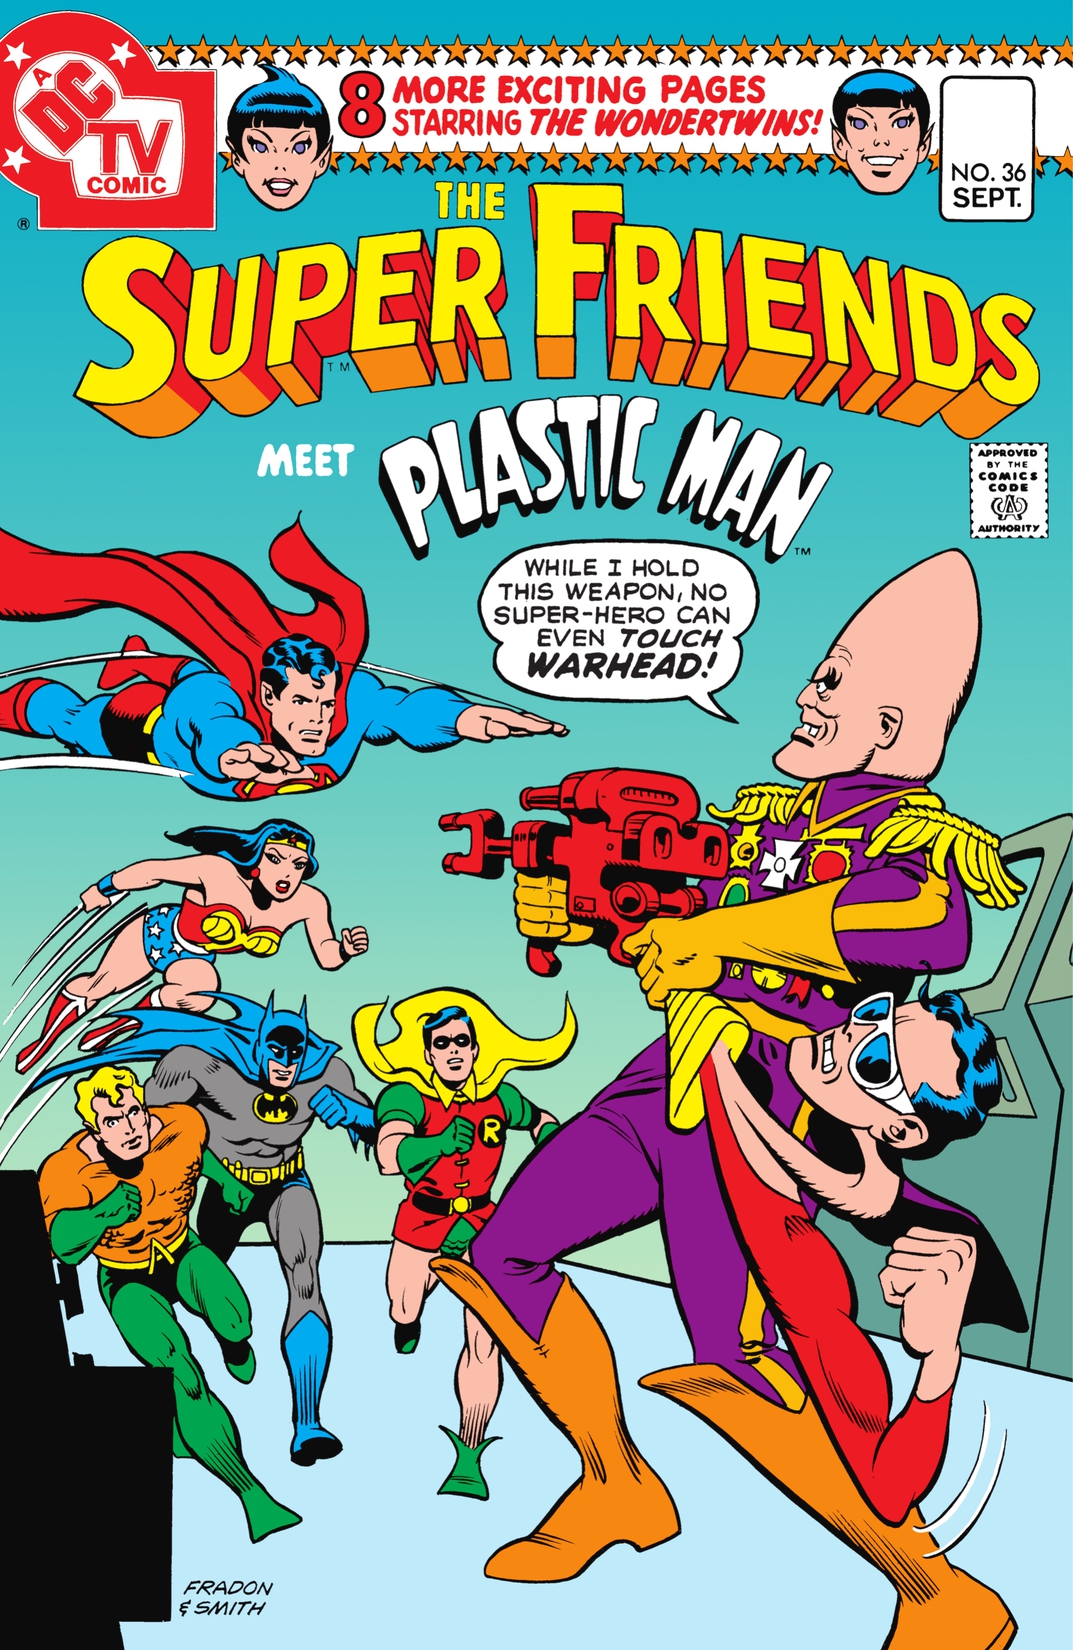 Super Friends (1976-1981) #36 preview images